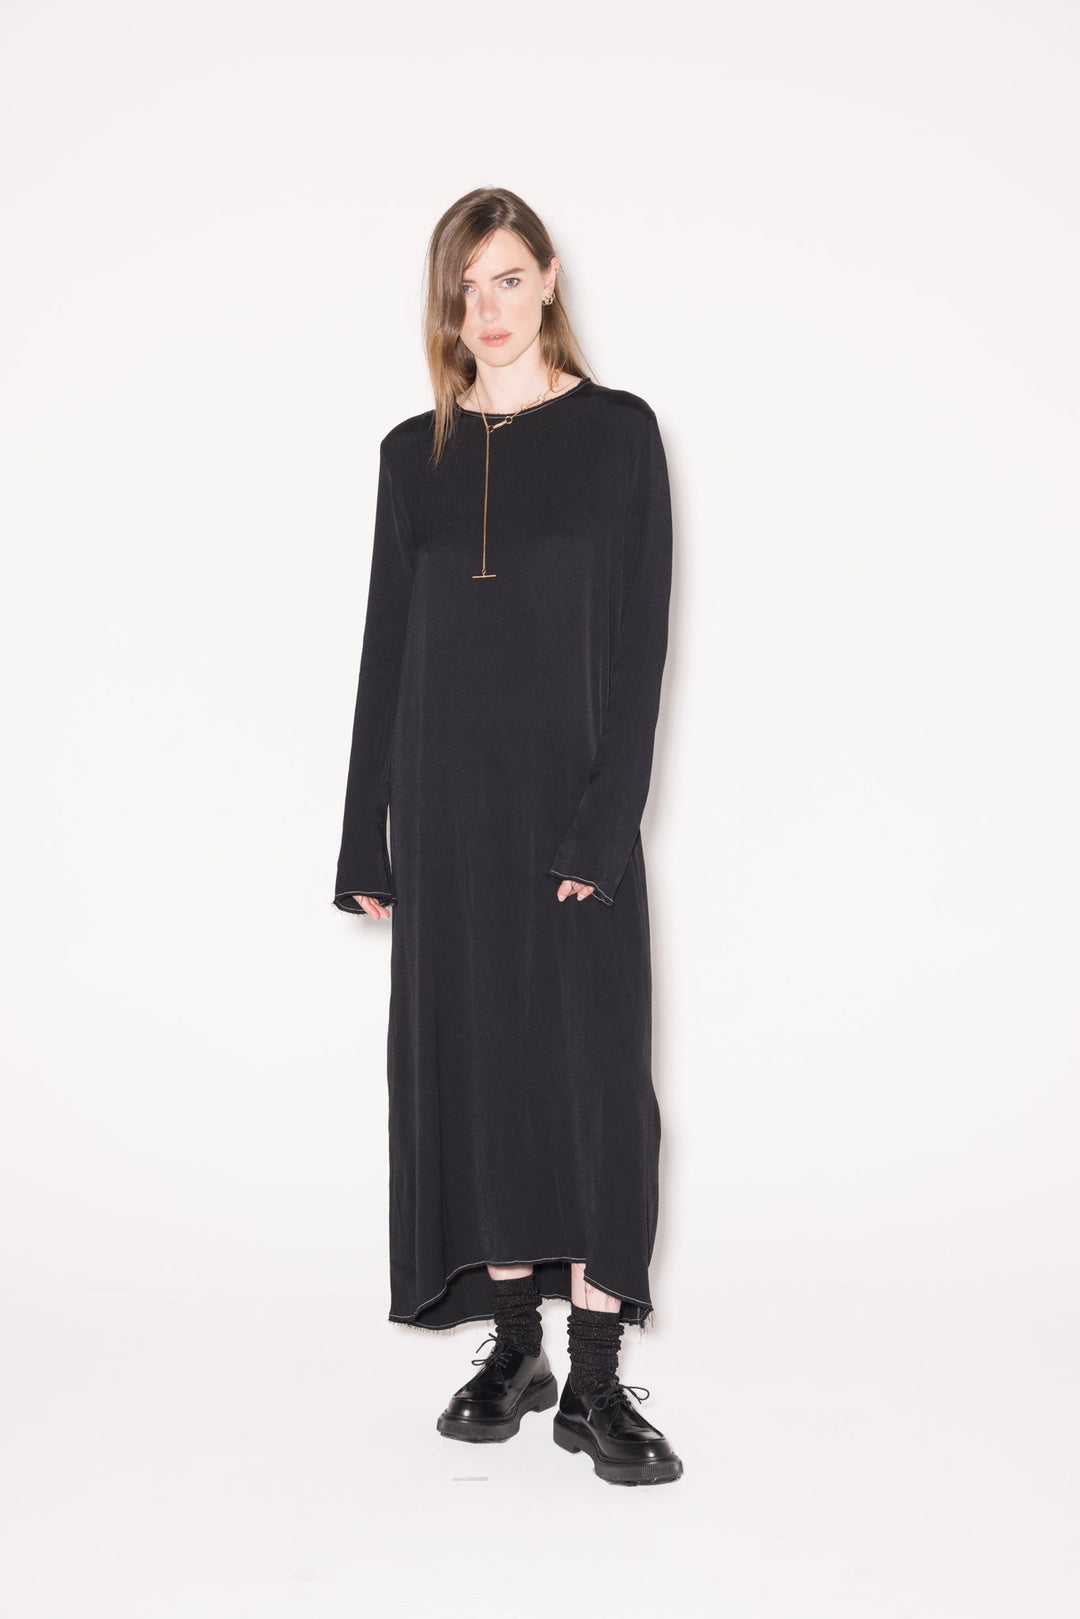 Yin Dress - Black - Chillis & More NZ